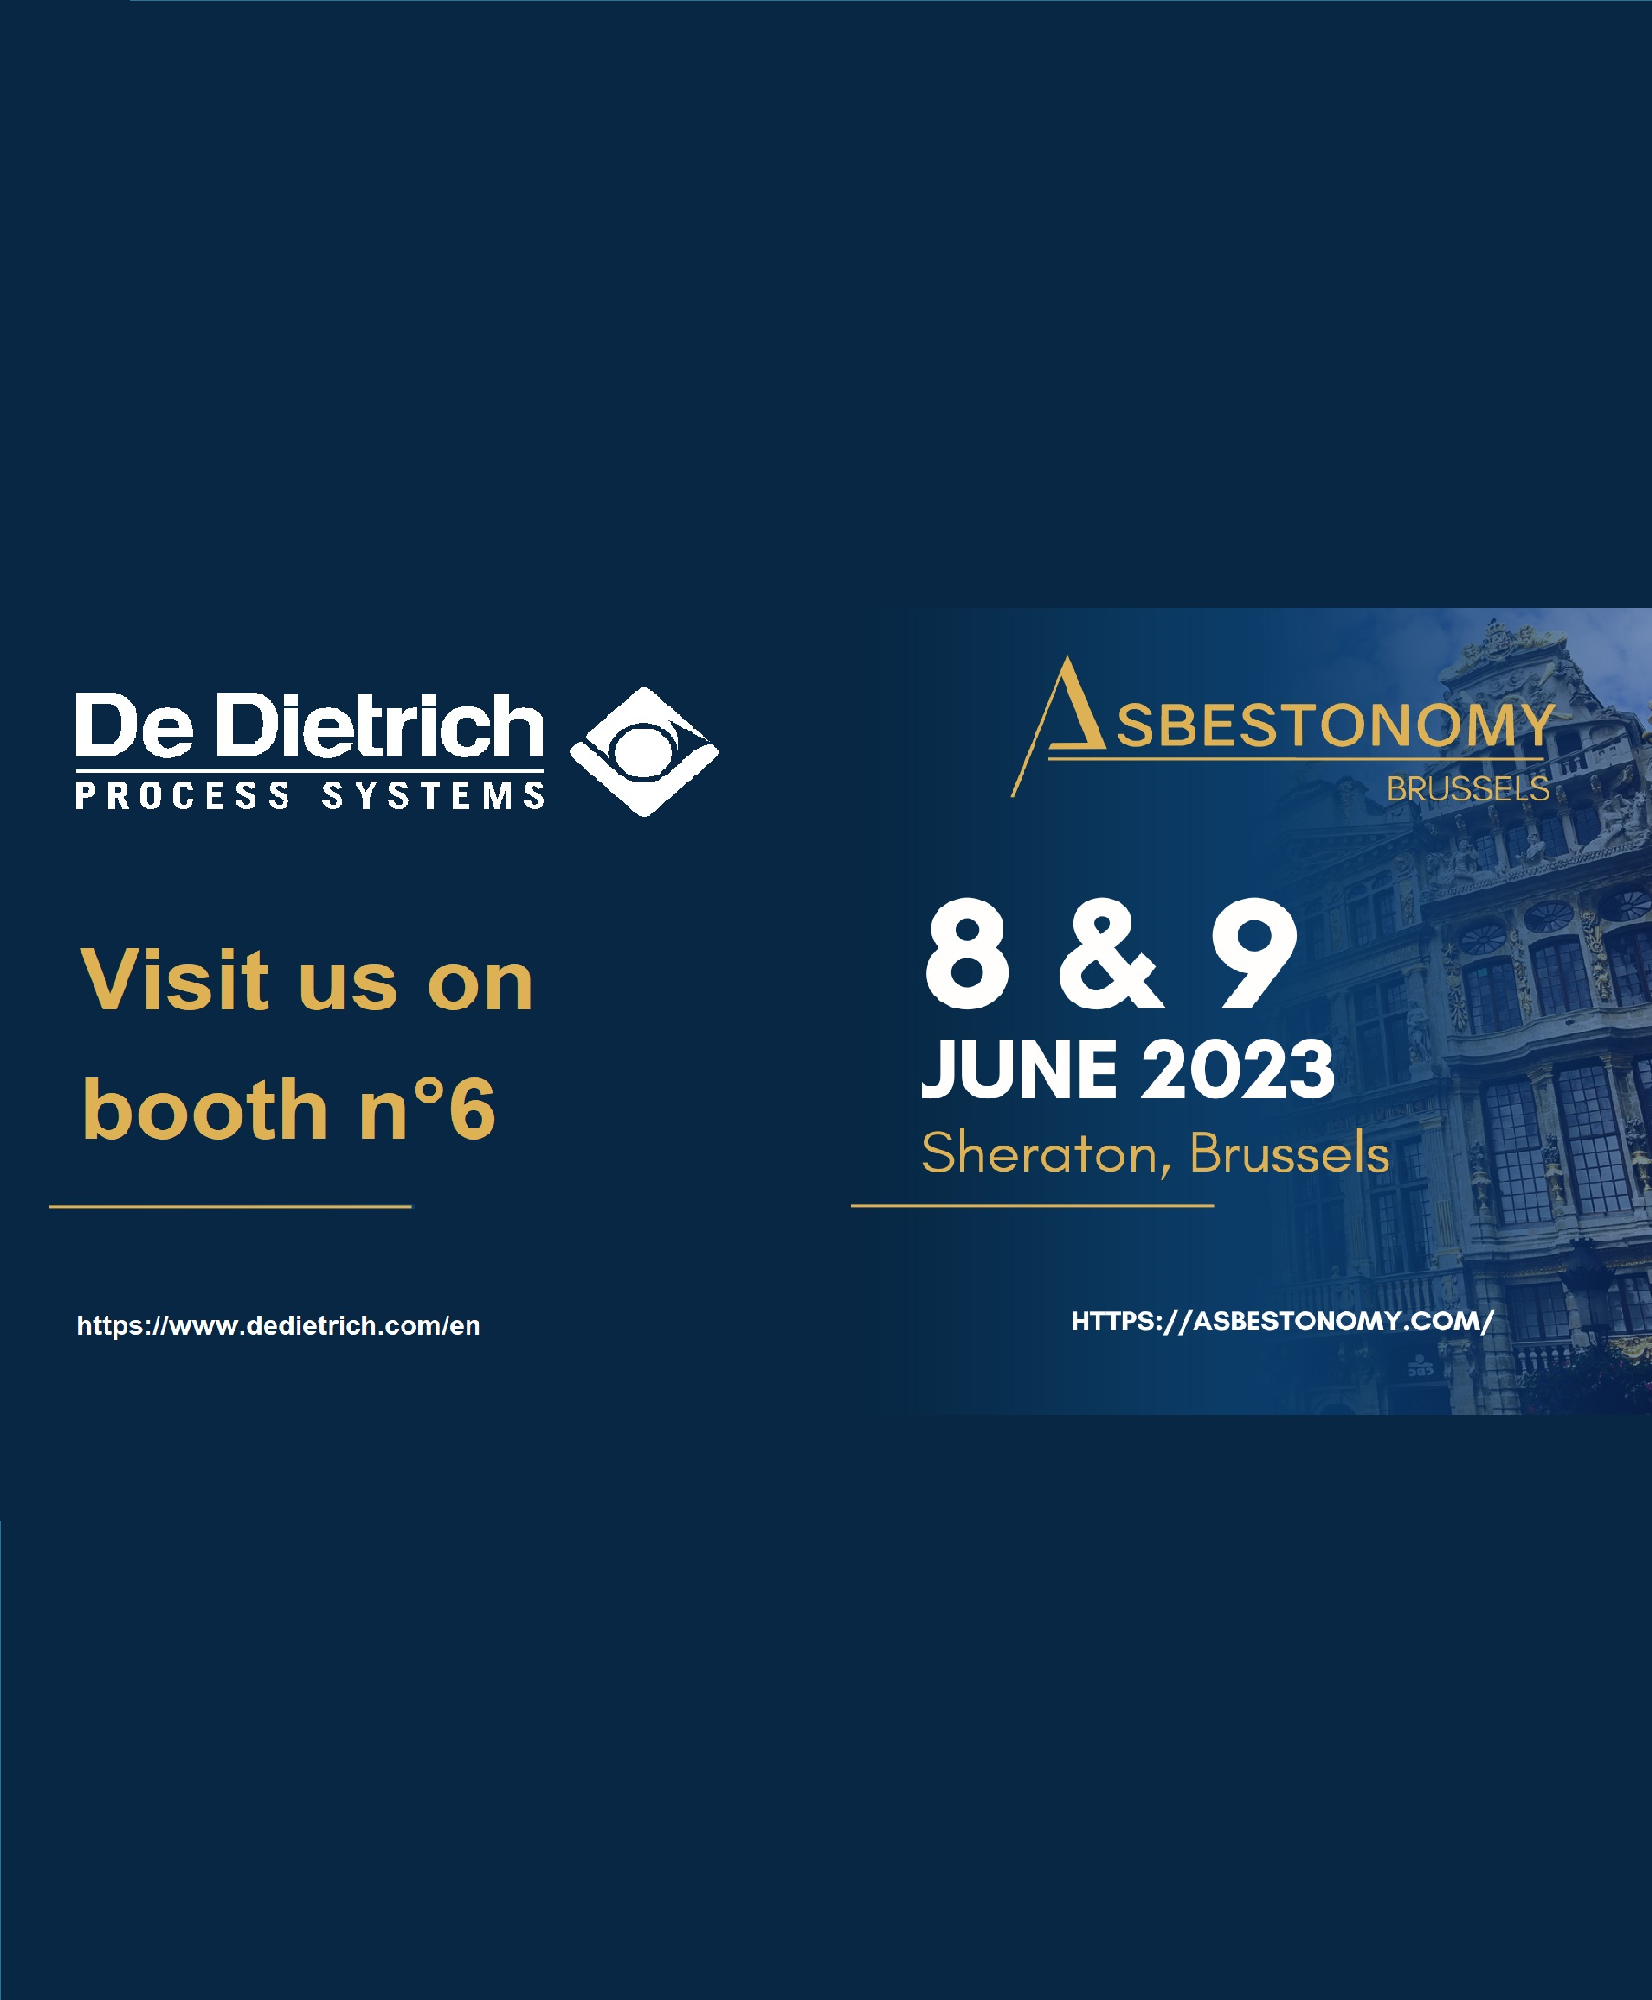  De Dietrich exhibits at Asbestonomy 2023 